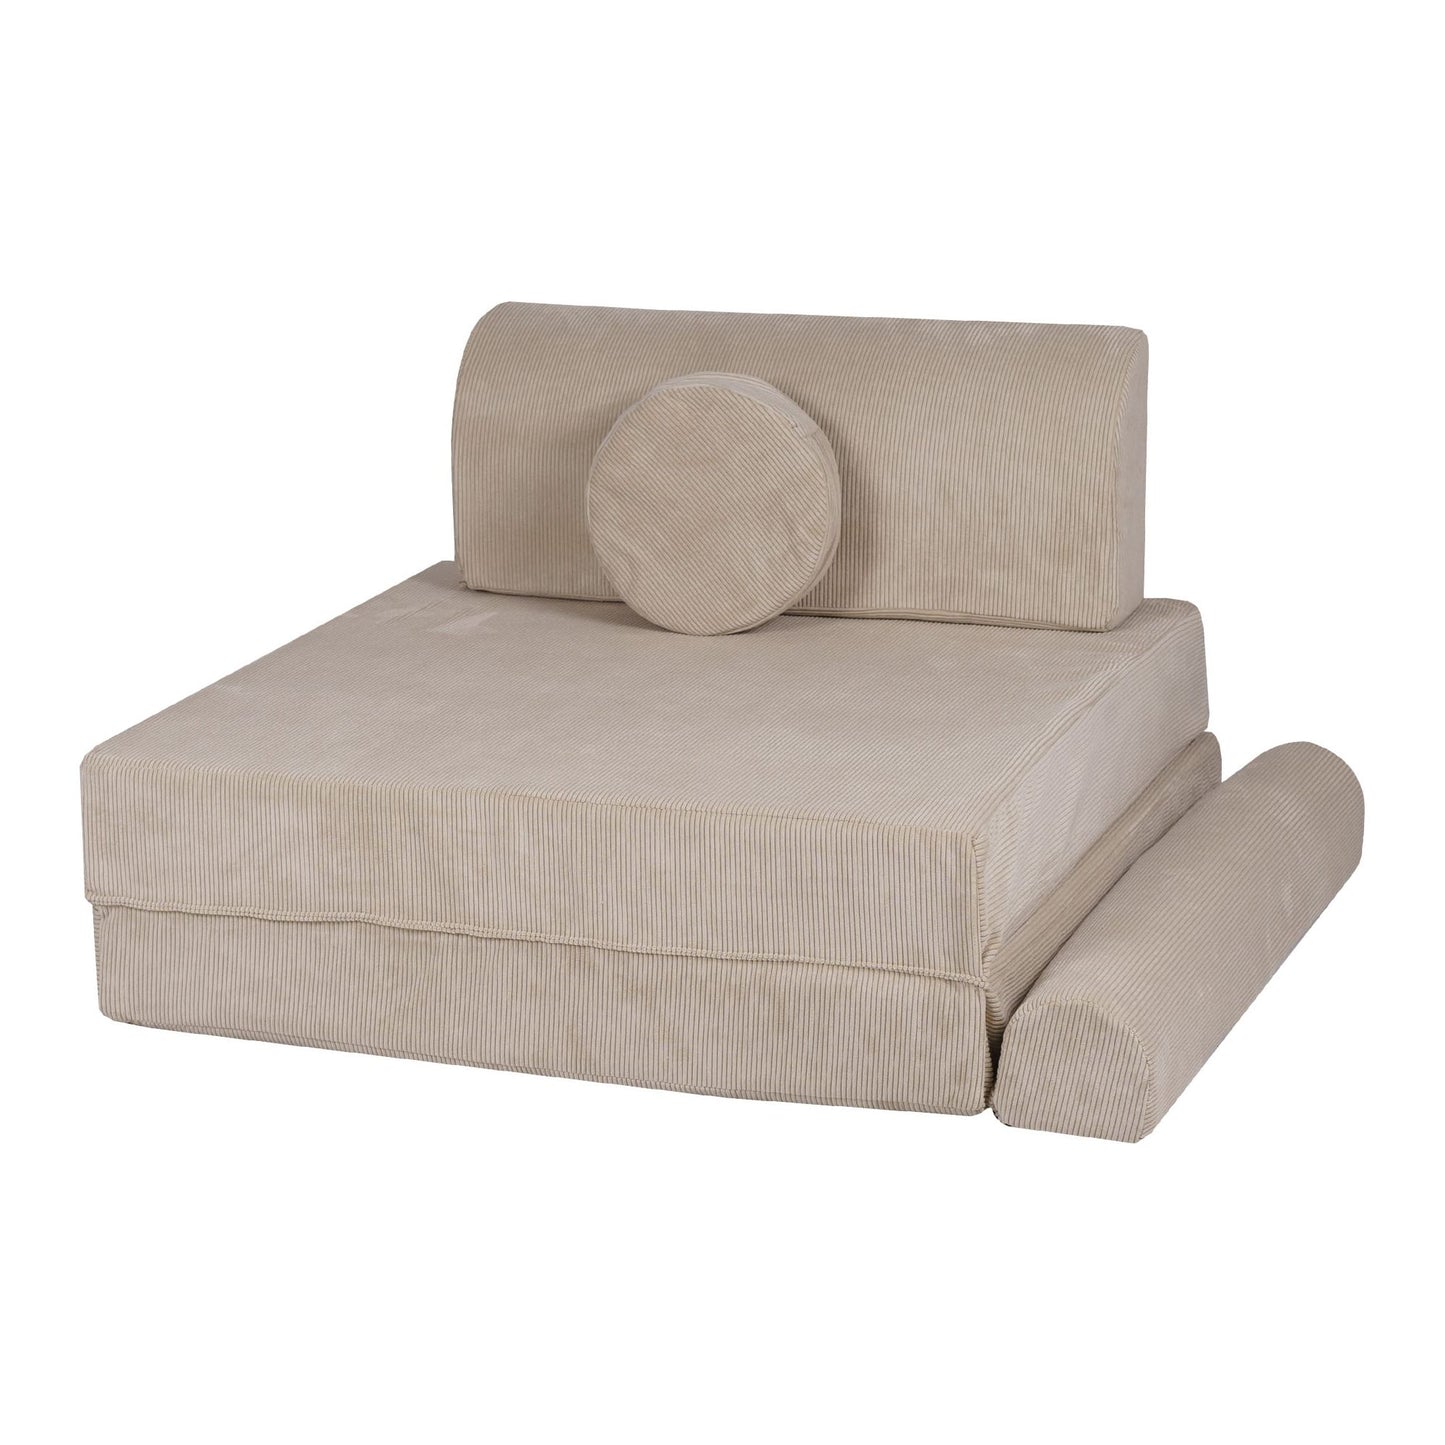 MeowBaby Kids Soft Play Sofa & Fold Out Bed - Corduroy Ecru single seat close up